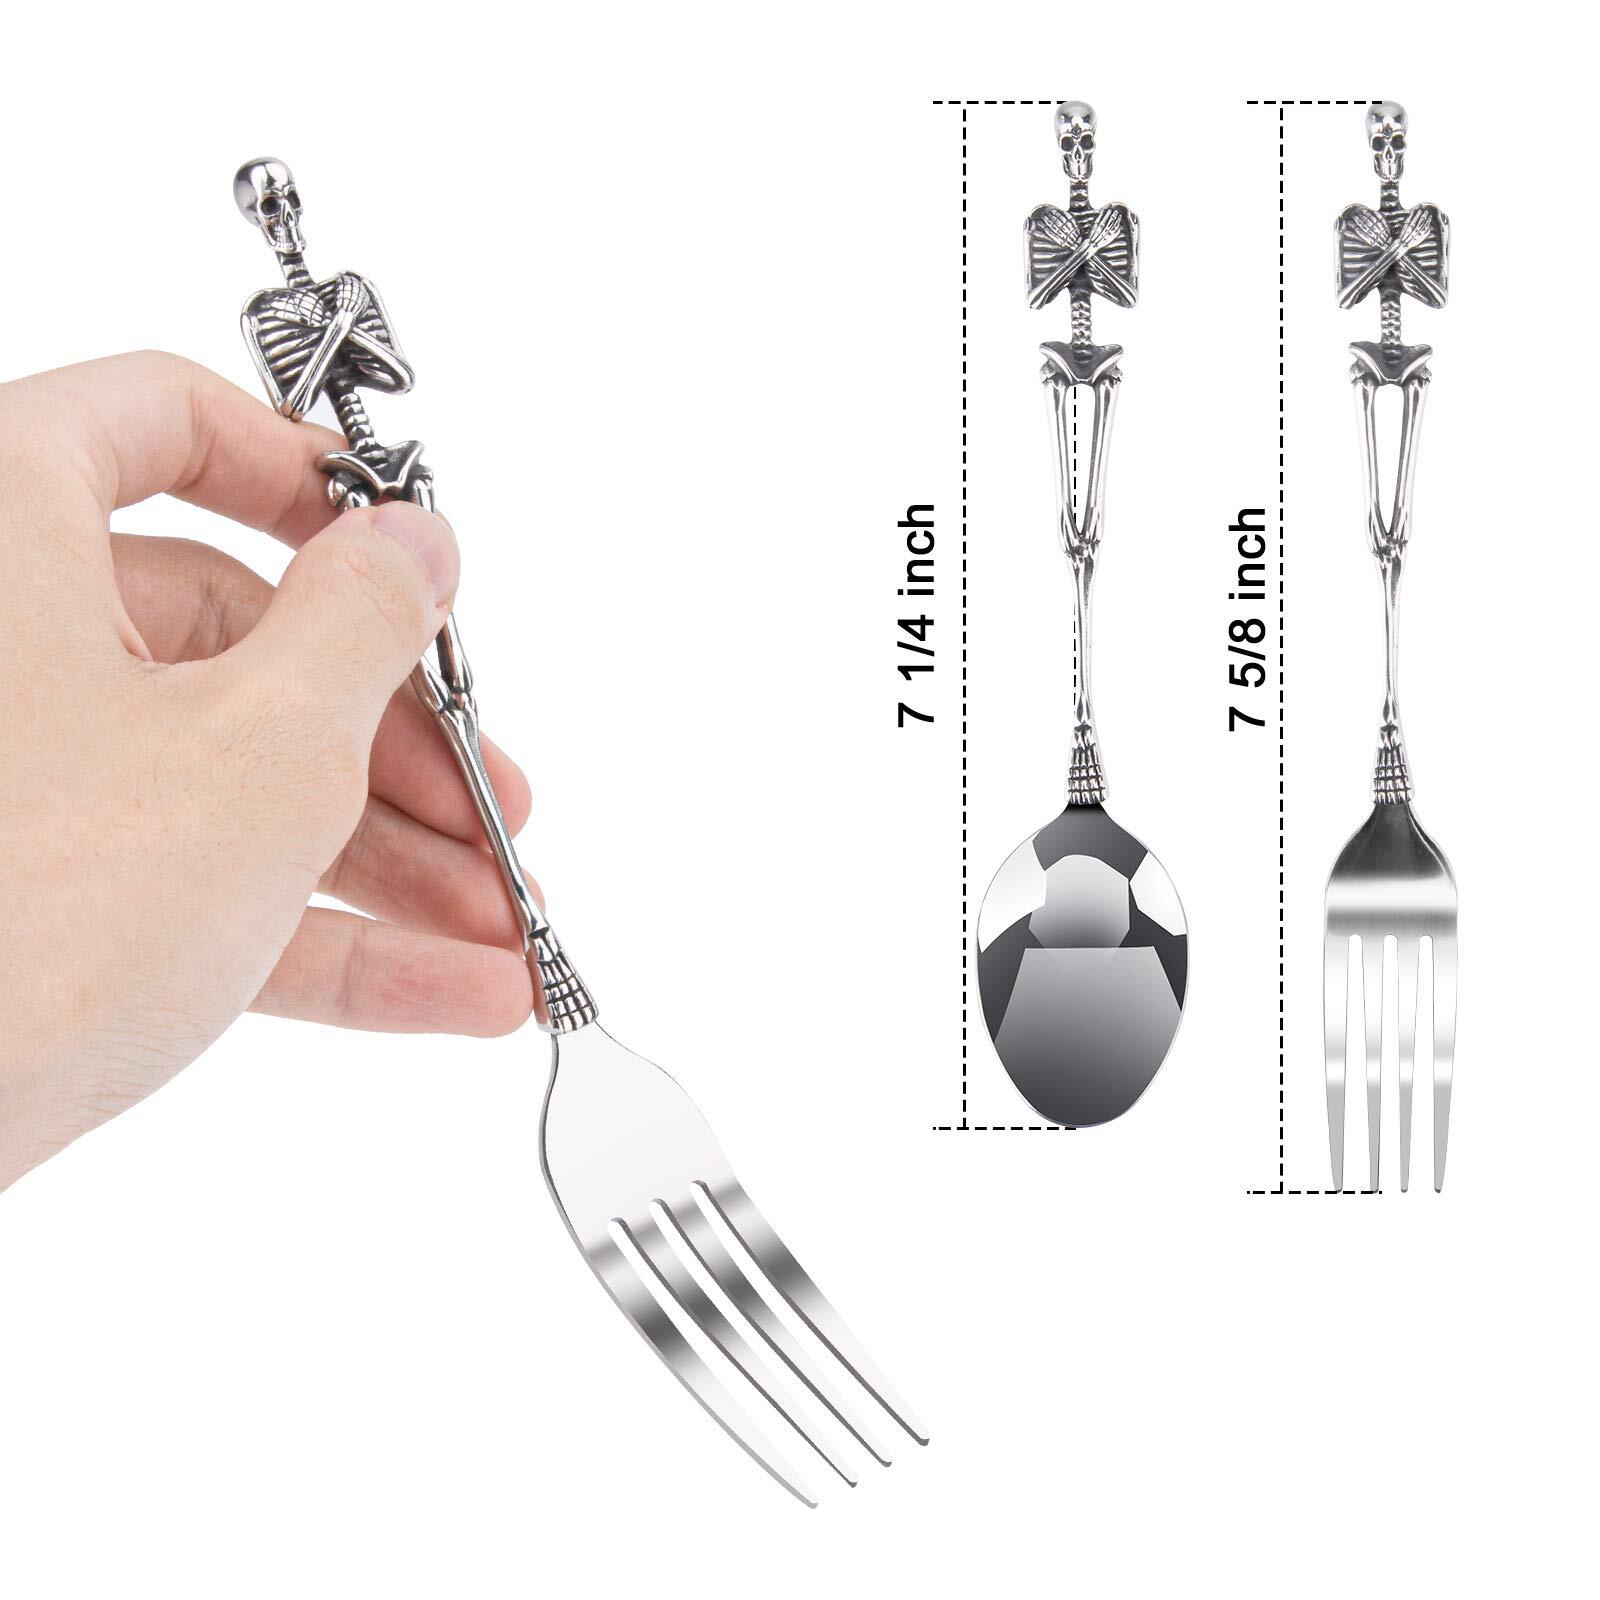 Handmade Stainless Steel Skeleton Fork and Spoon